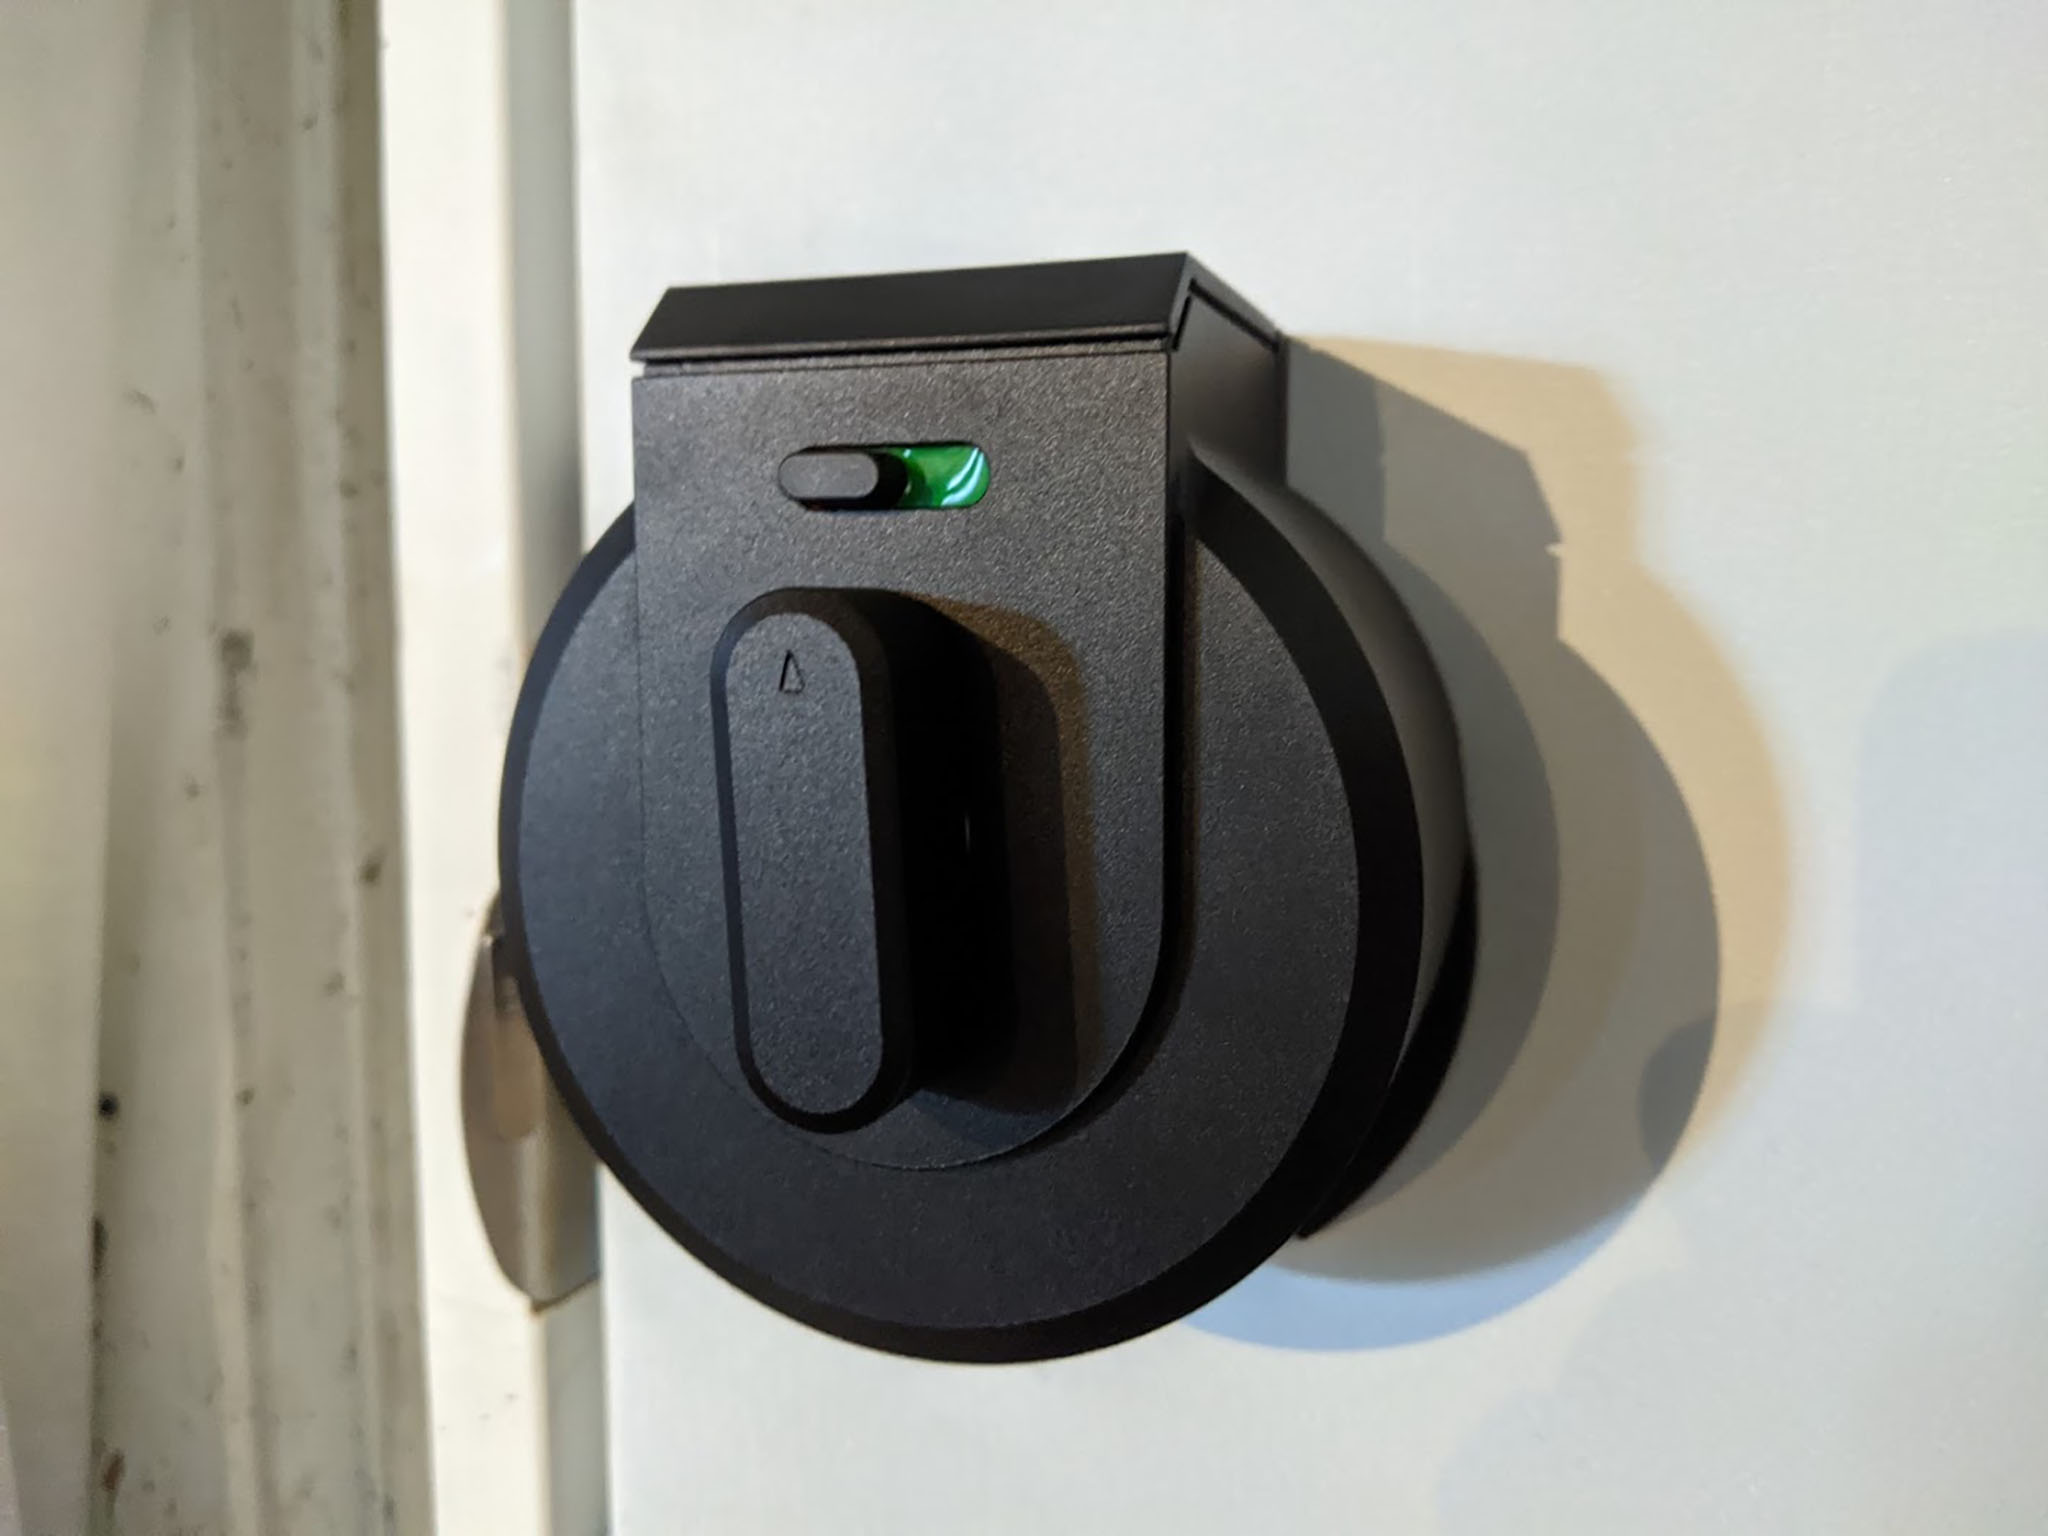 Securam Touch Smart Lock Inside Piece